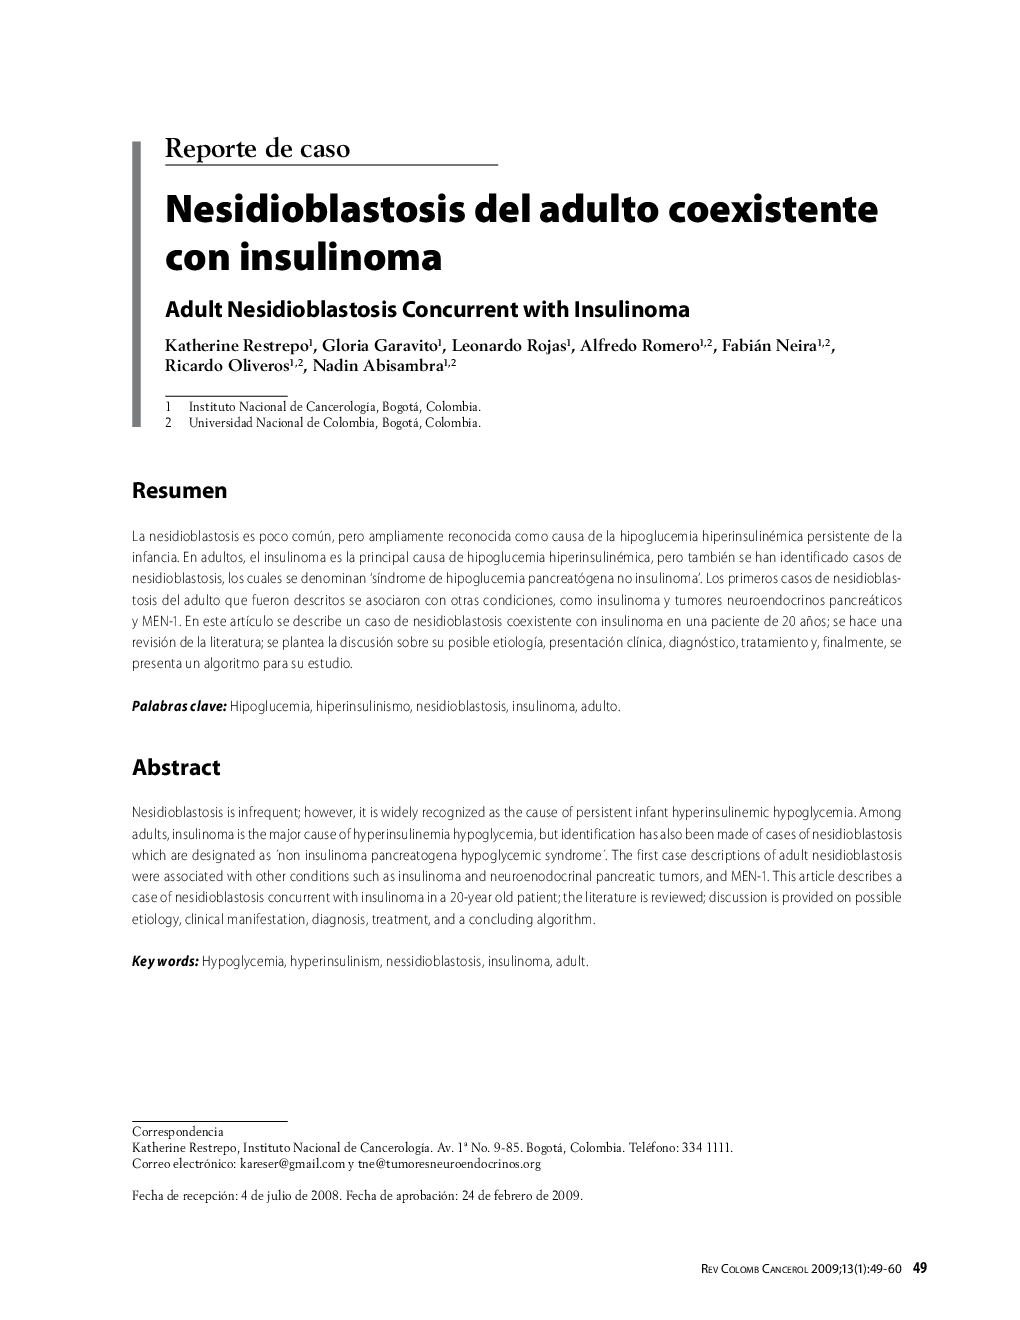 Nesidioblastosis del adulto coexistente con insulinomaAdult Nesidioblastosis Concurrent with Insulinoma